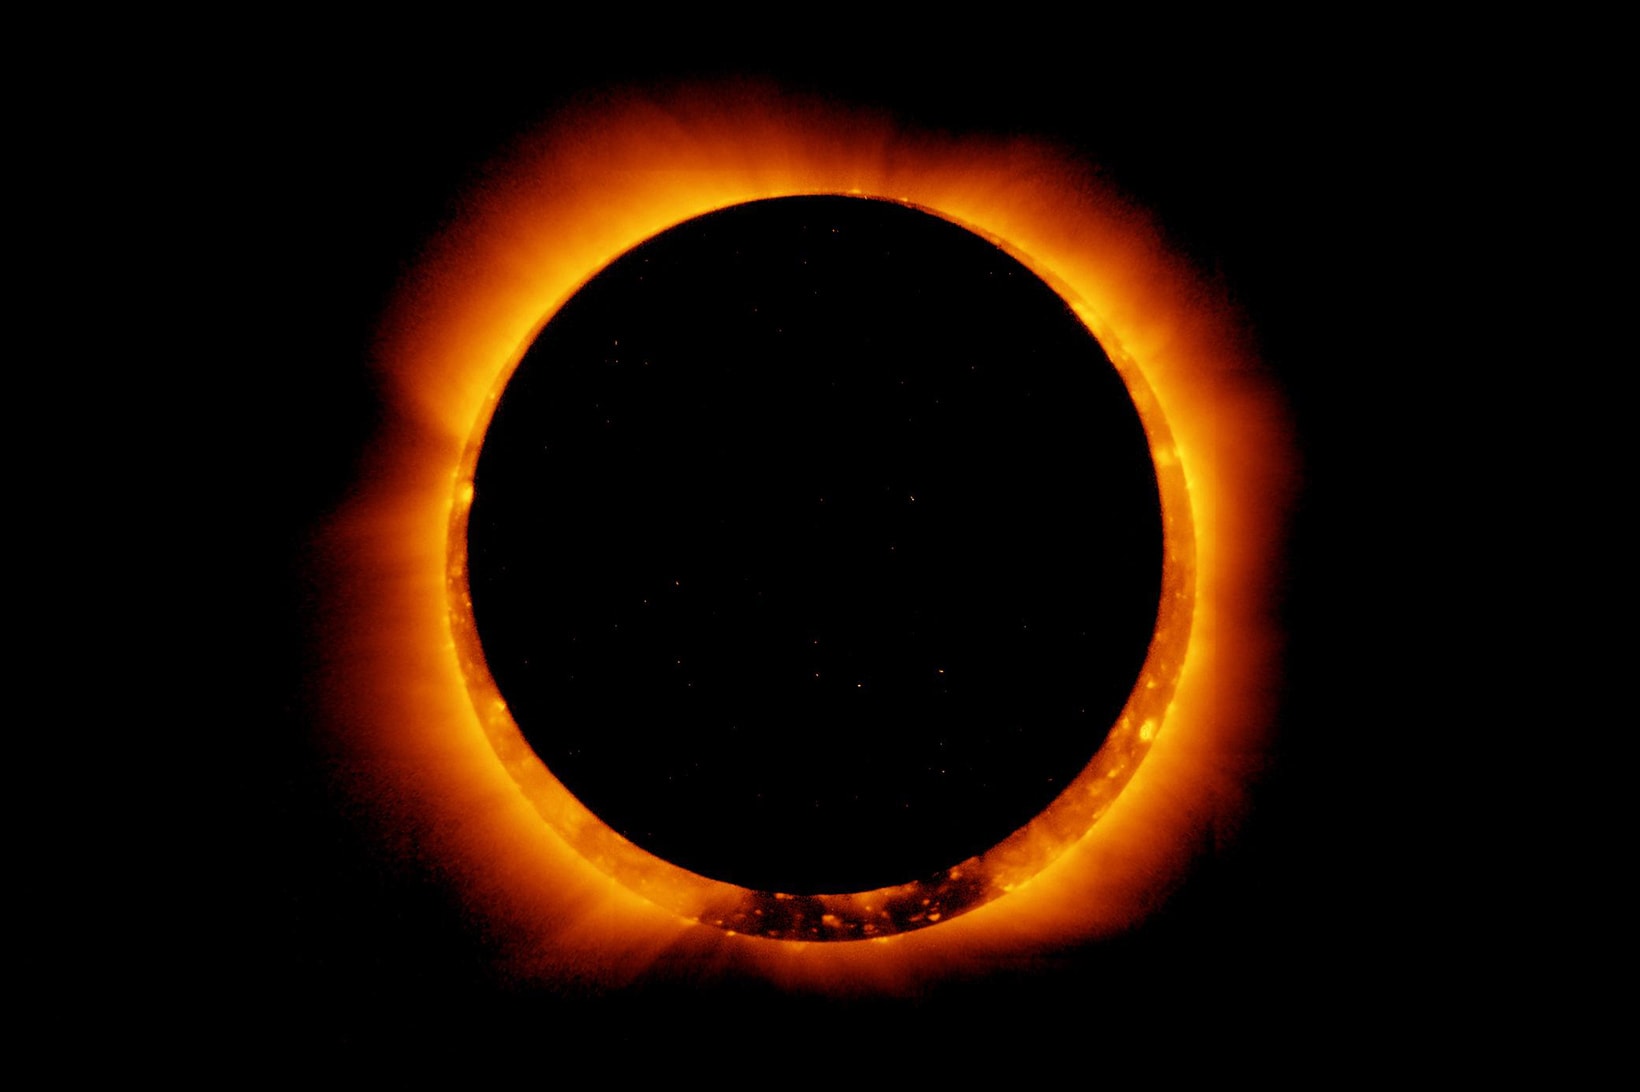 Solar Eclipse 360 Degree 4K CNN Livestream Live Stream Streaming Video 2017 August 21